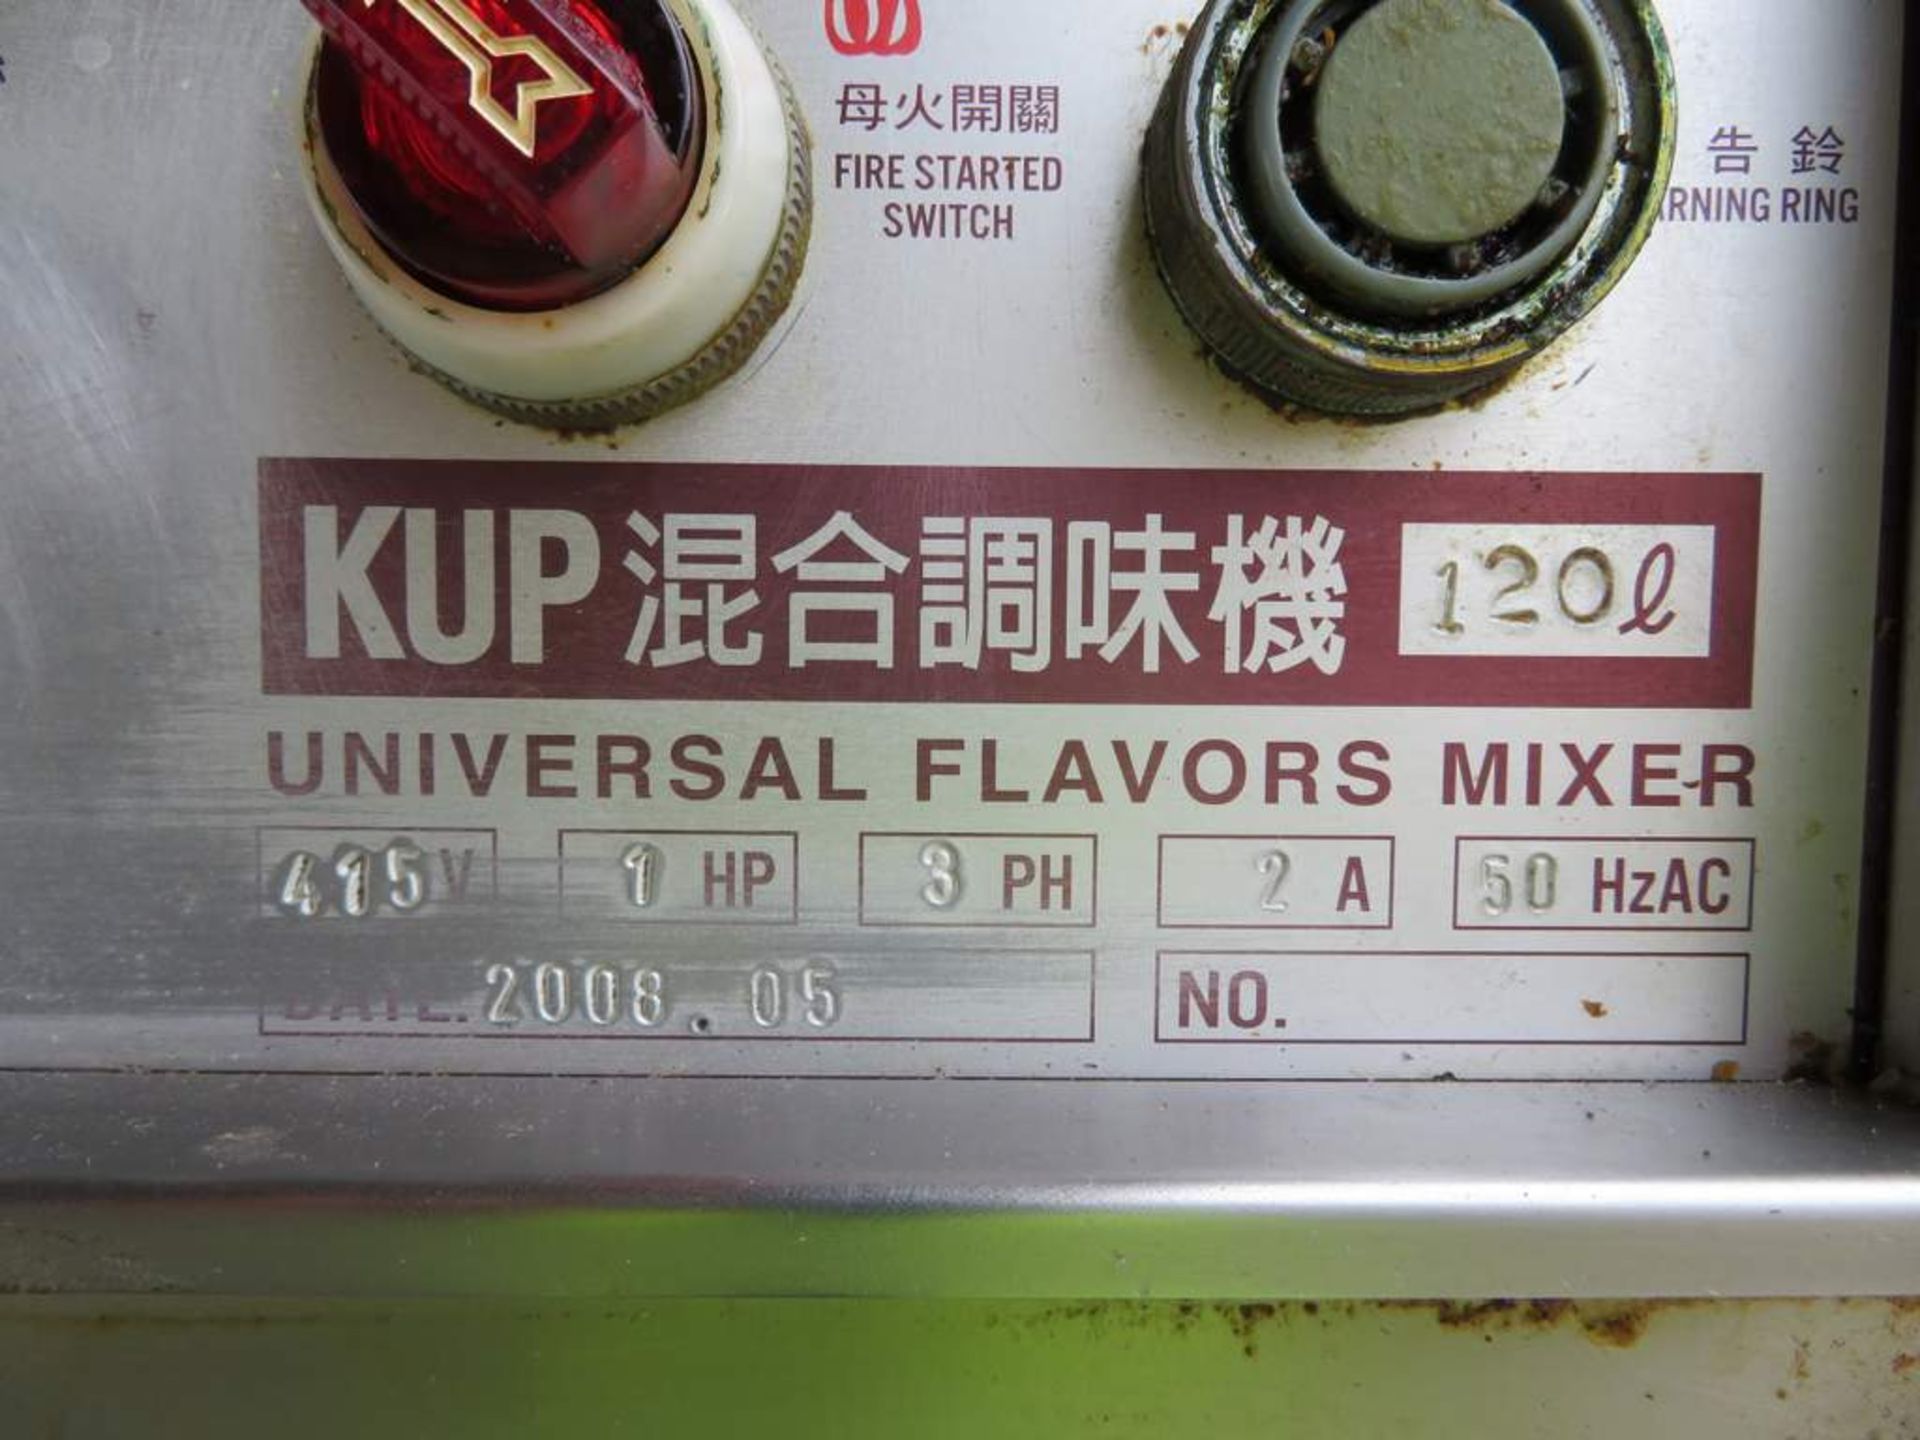 Anko SF Series universal flavors mixer - Image 7 of 11